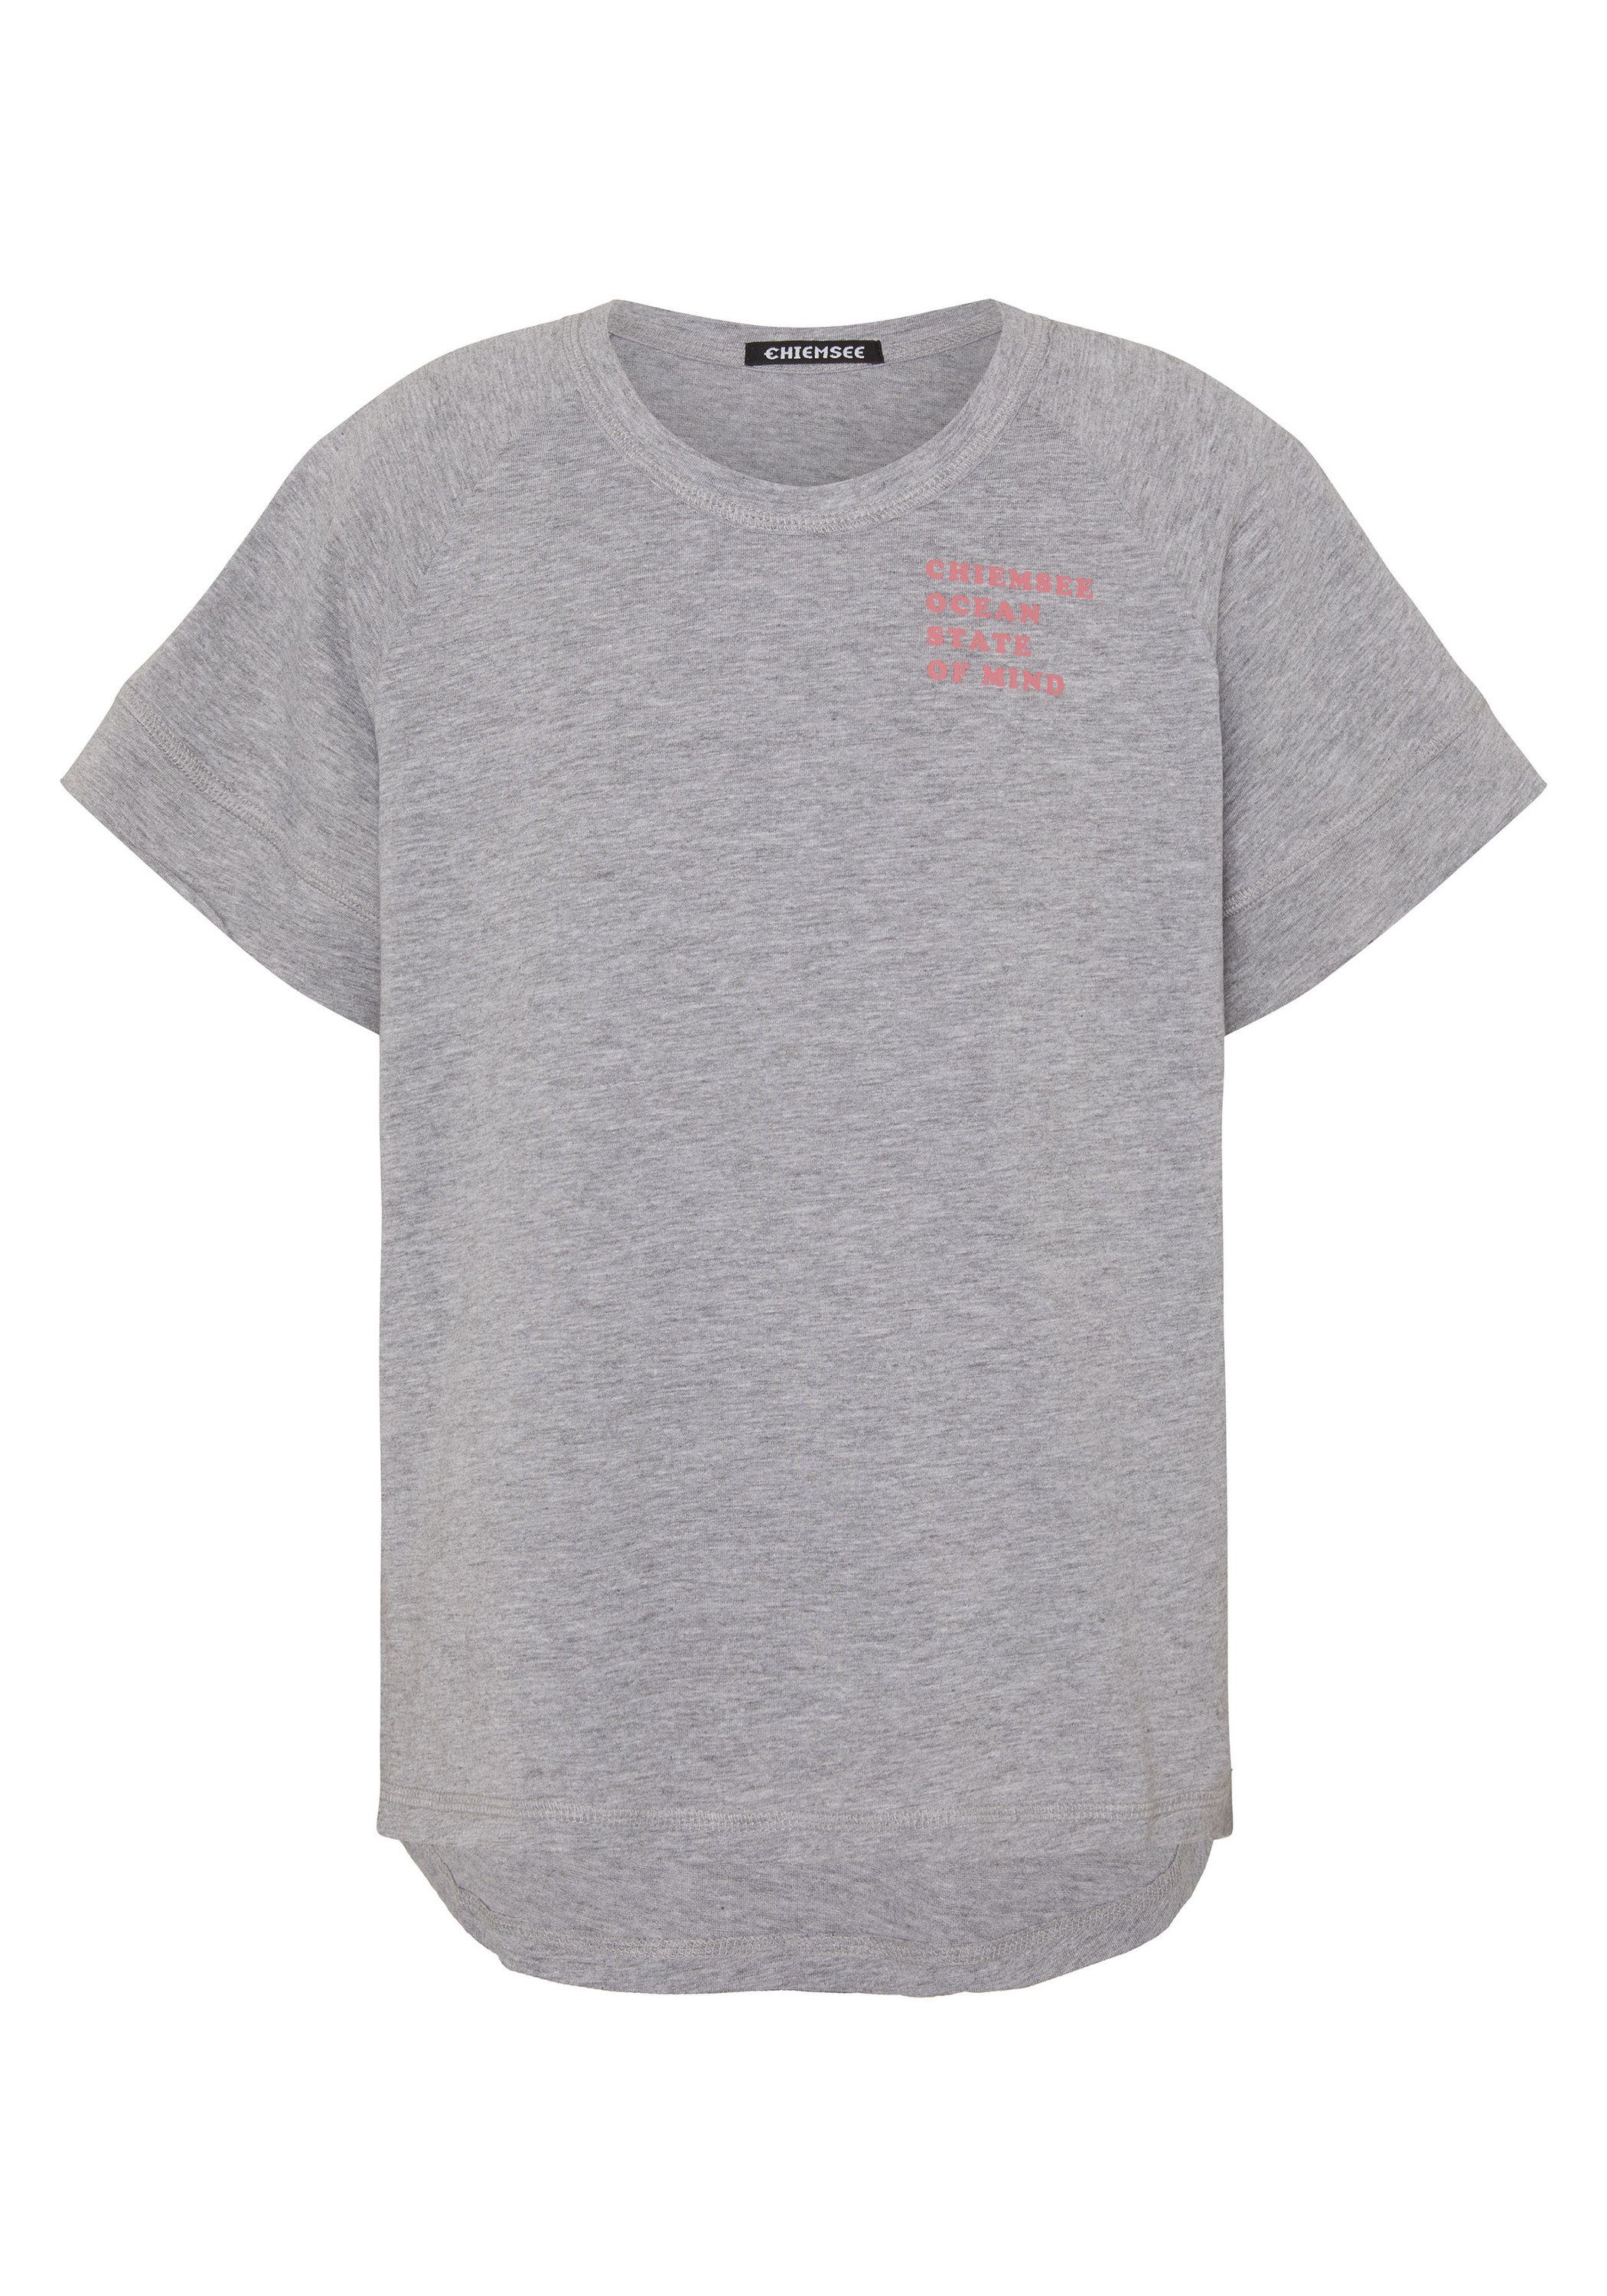 Chiemsee Print-Shirt Shirt aus Jersey mit Print 1 17-4402M Neutral Gray Melange